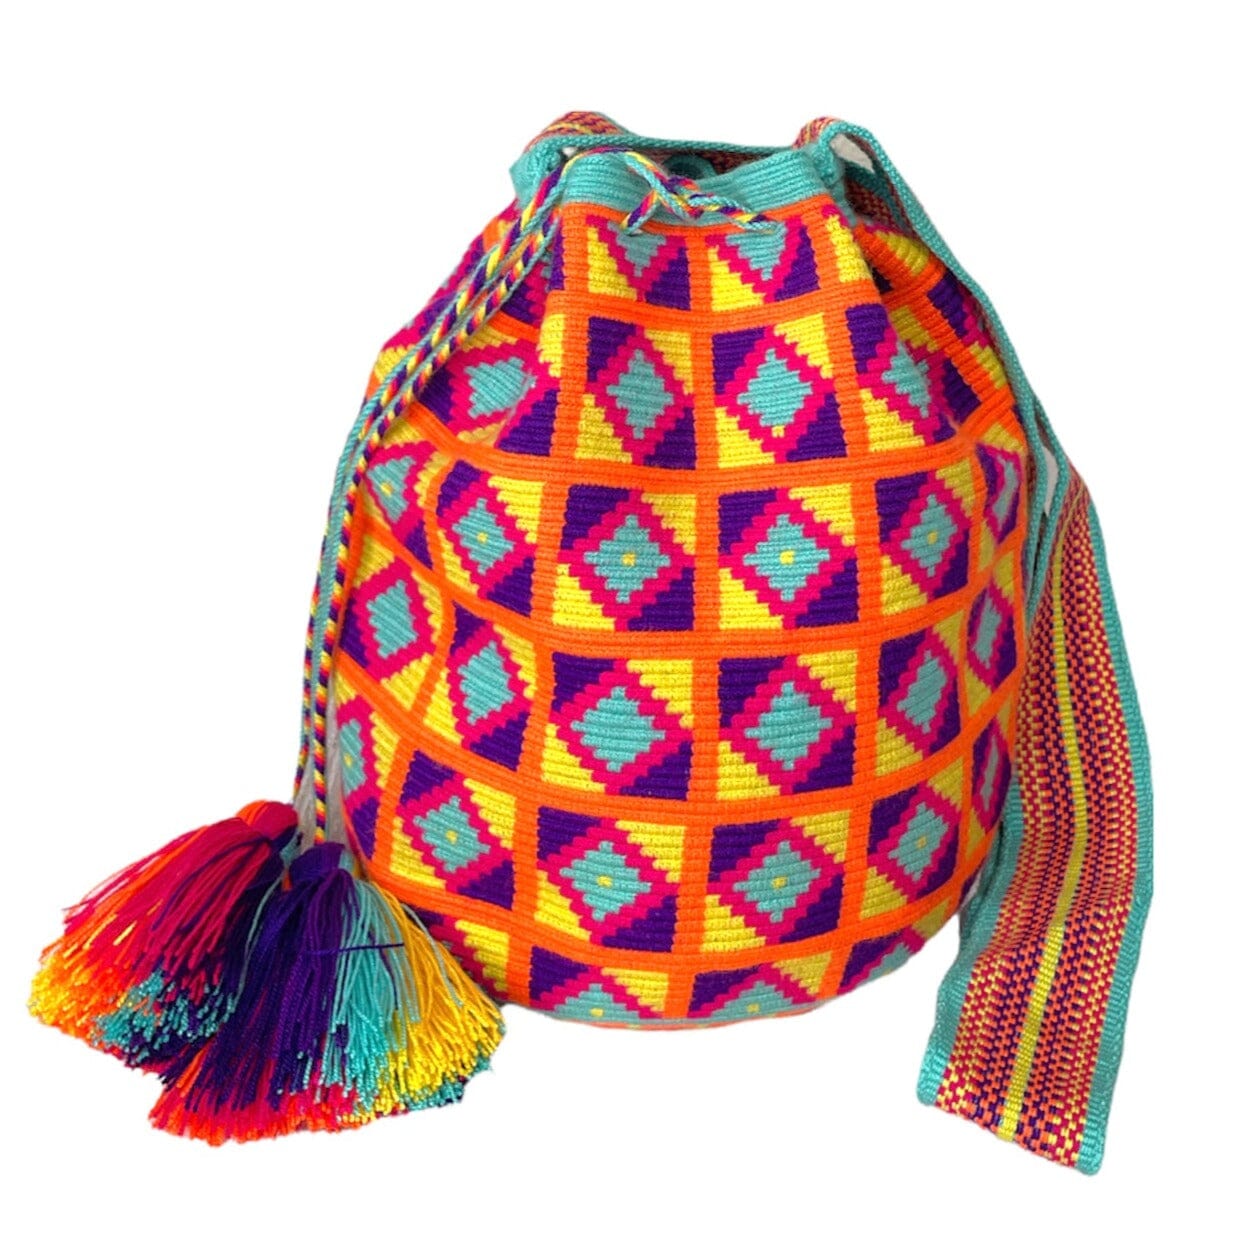 Cute Boho Neon Beach Bags for Summer | Premium Crochet Bags | Colorful 4U